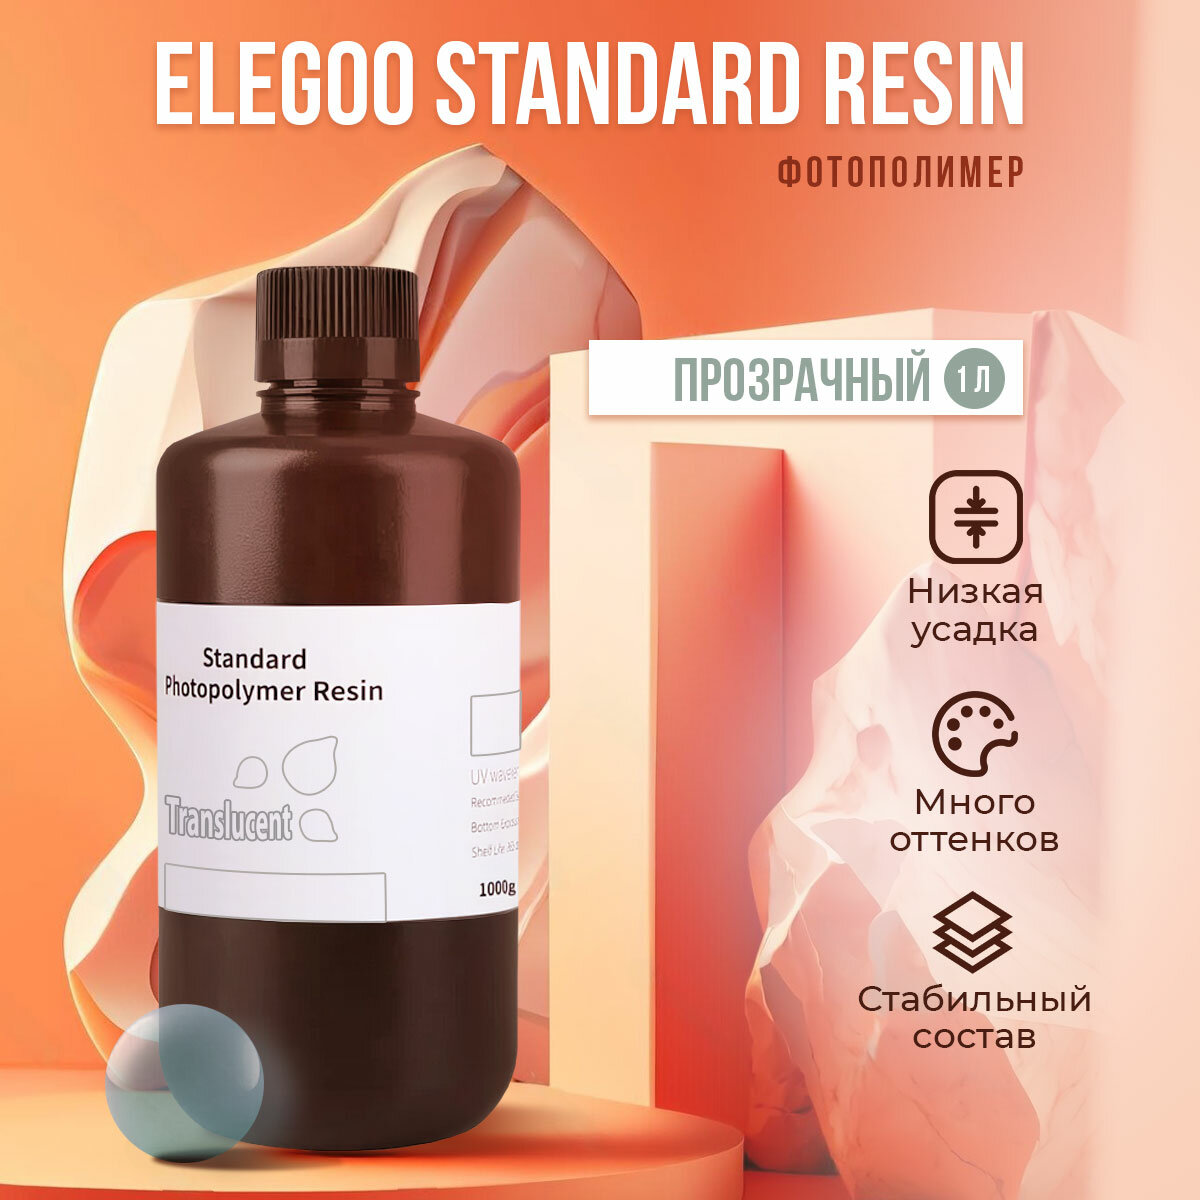 Фотополимер Elegoo Standard Resin Прозрачный, 0.5 л